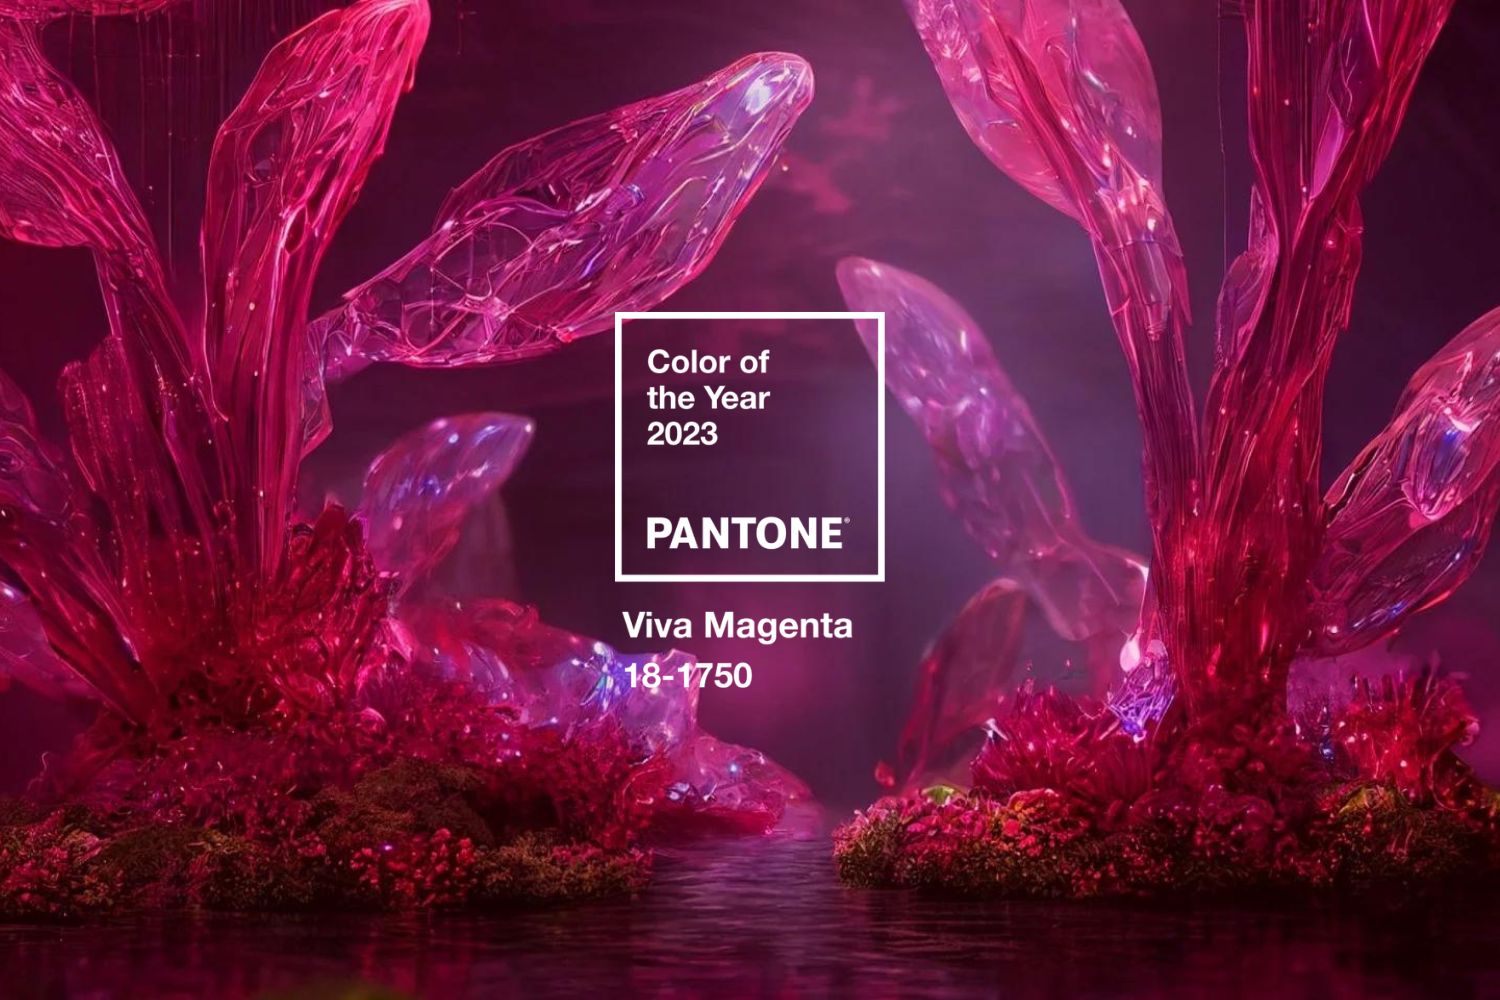 Viva Magenta - Pantone's Color of the Year 2023